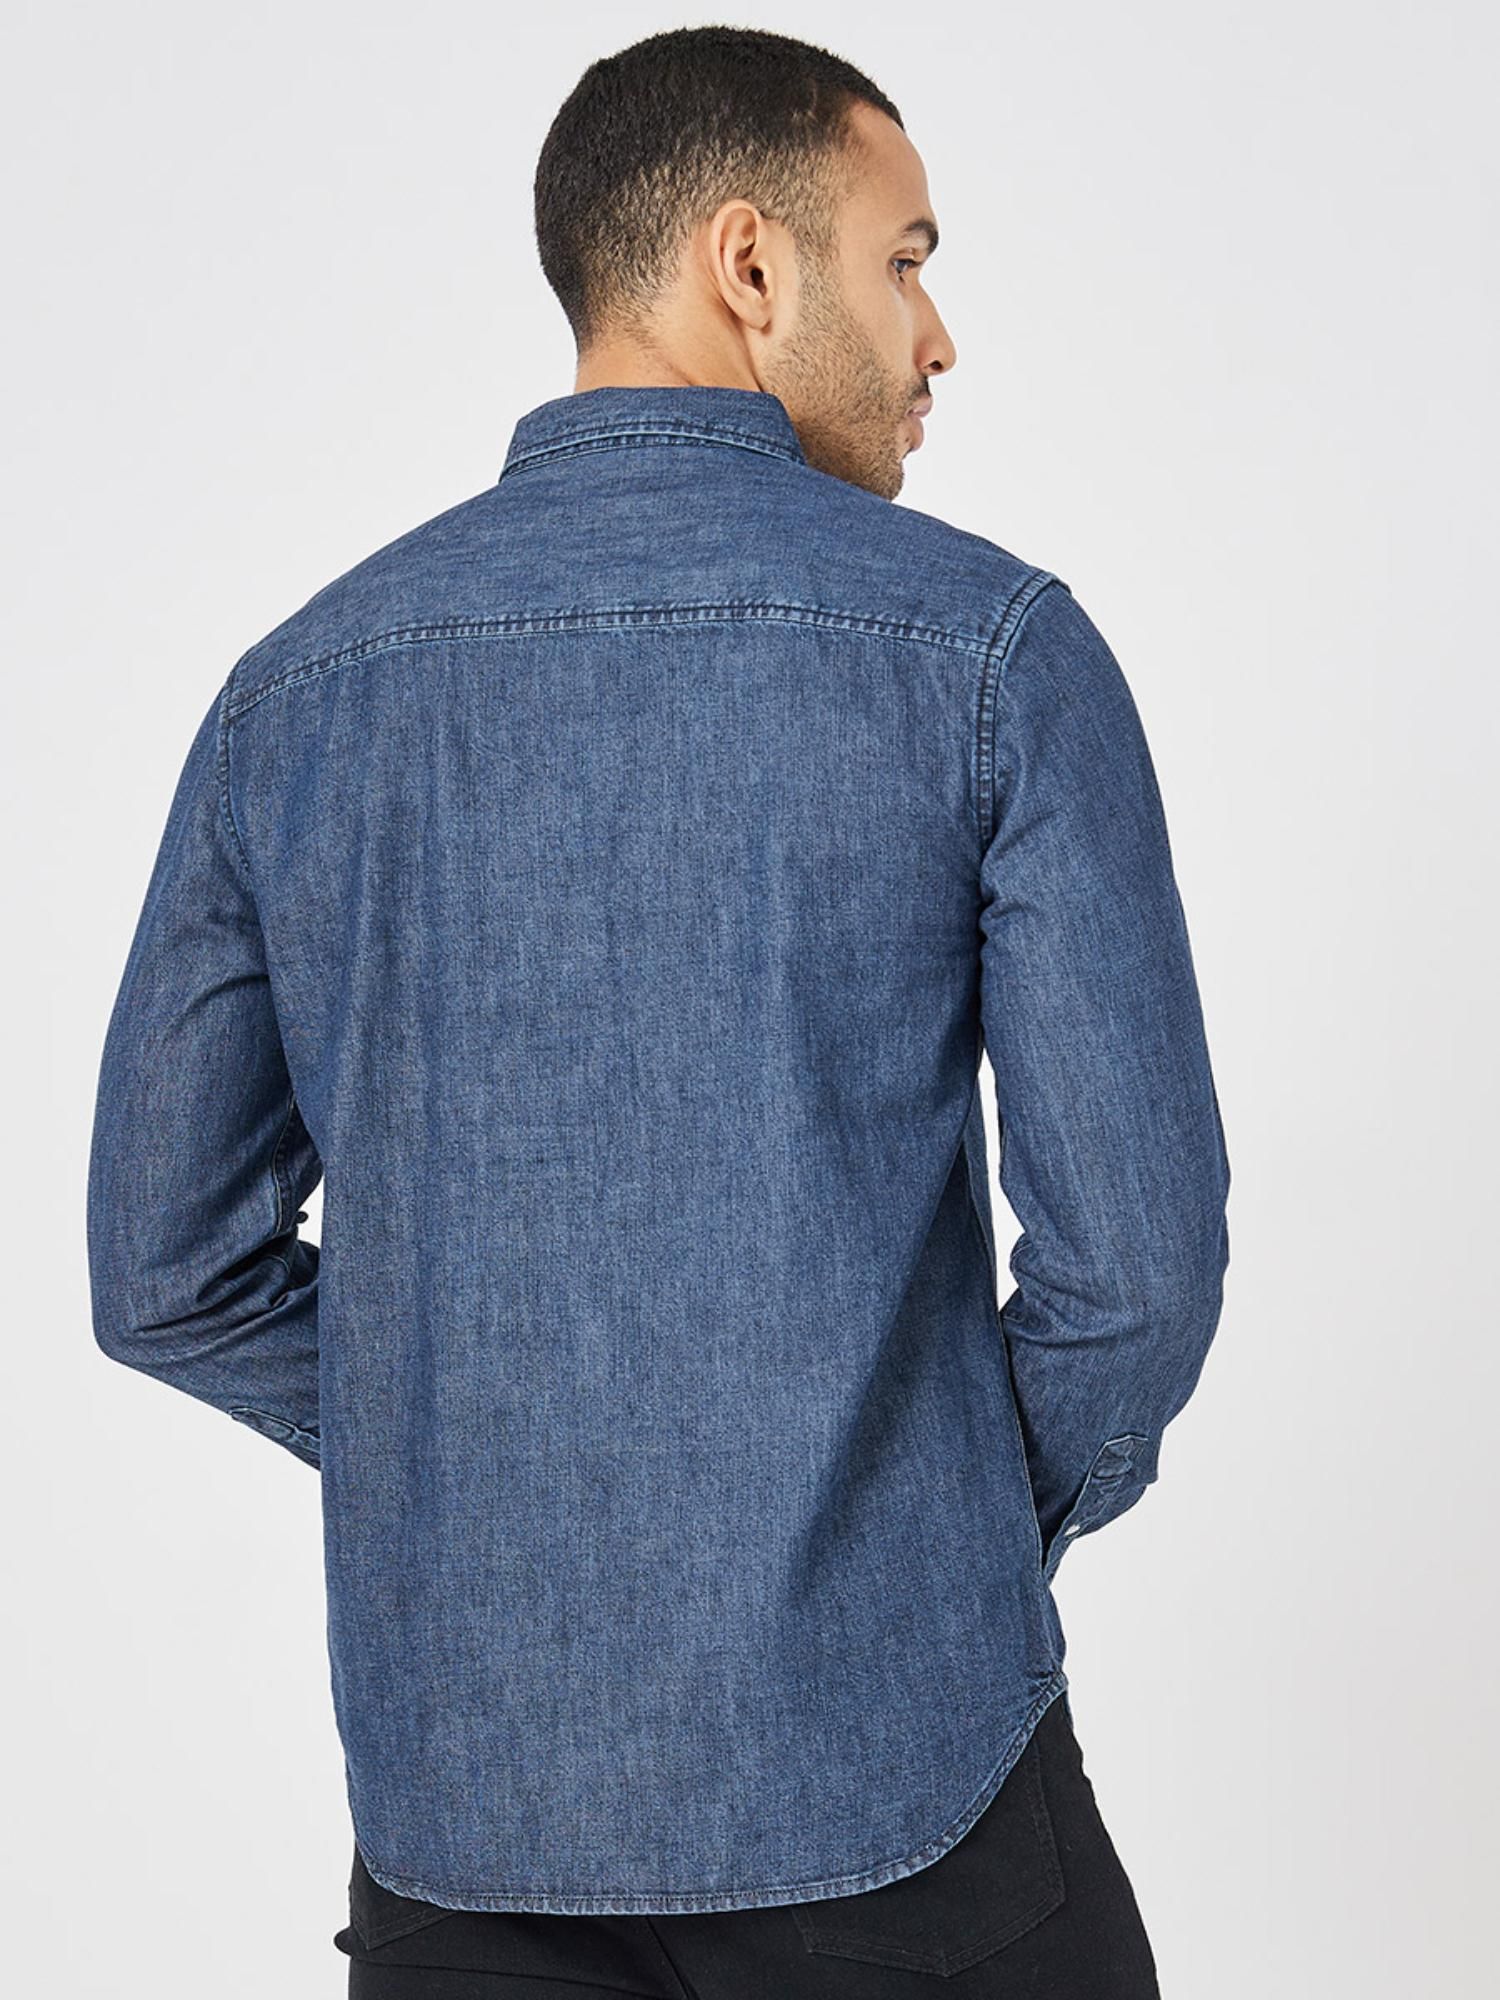 Bayox Blue Two Tone Button-Down Denim Shirt | Denim shirt, Stylish outfits,  Clothing items